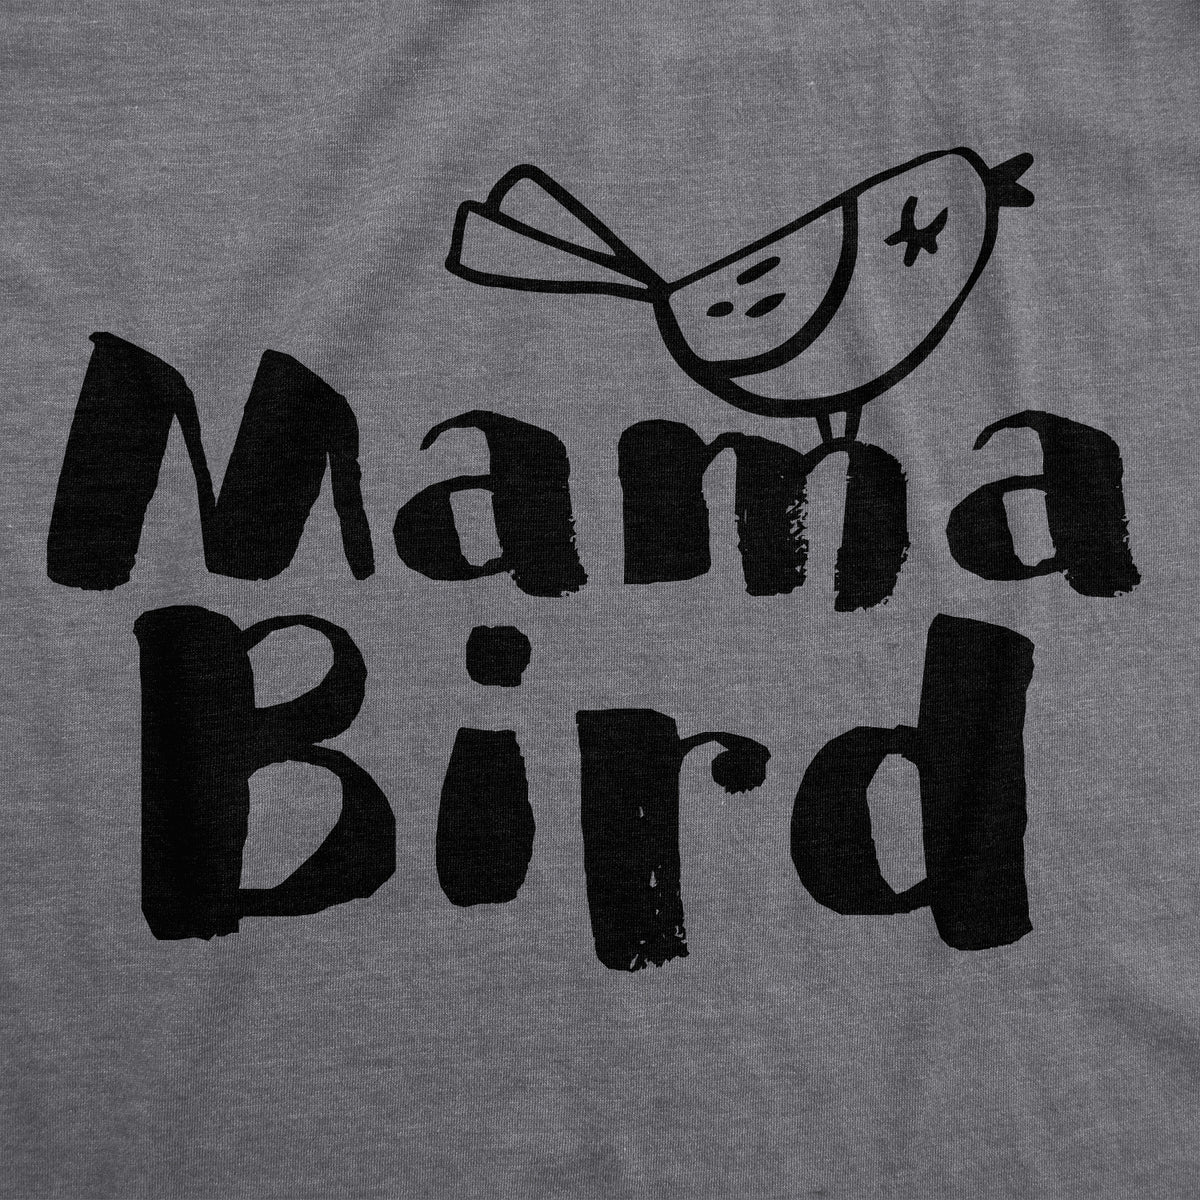 Mama Bird Women&#39;s T Shirt